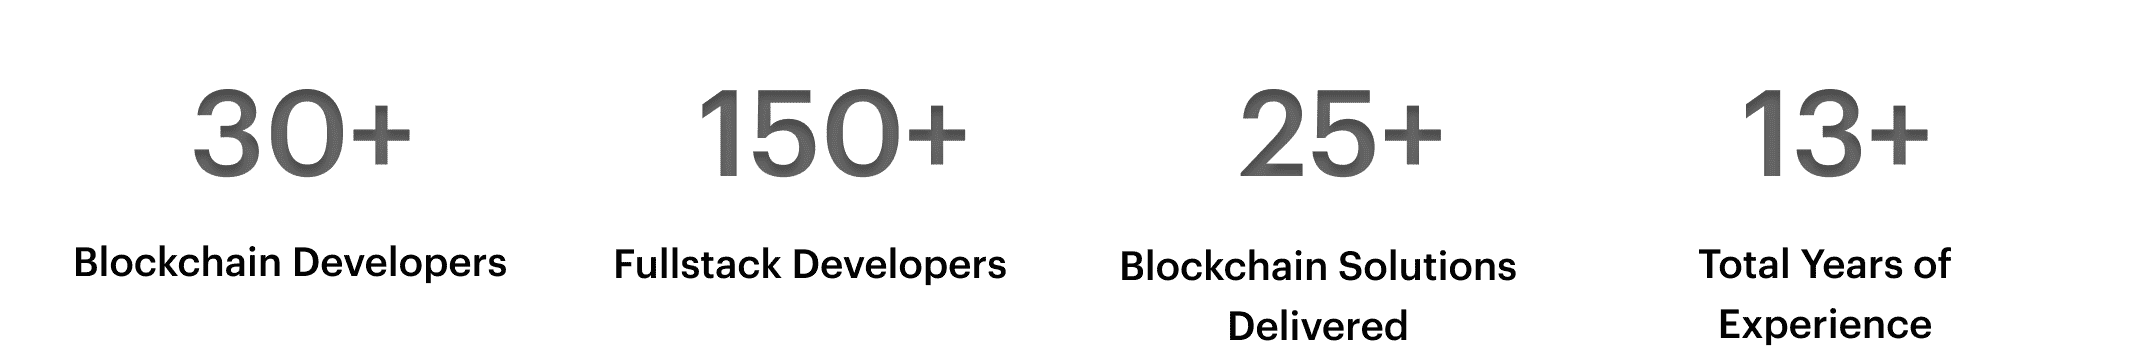 Stellar Blockchain development-numbers